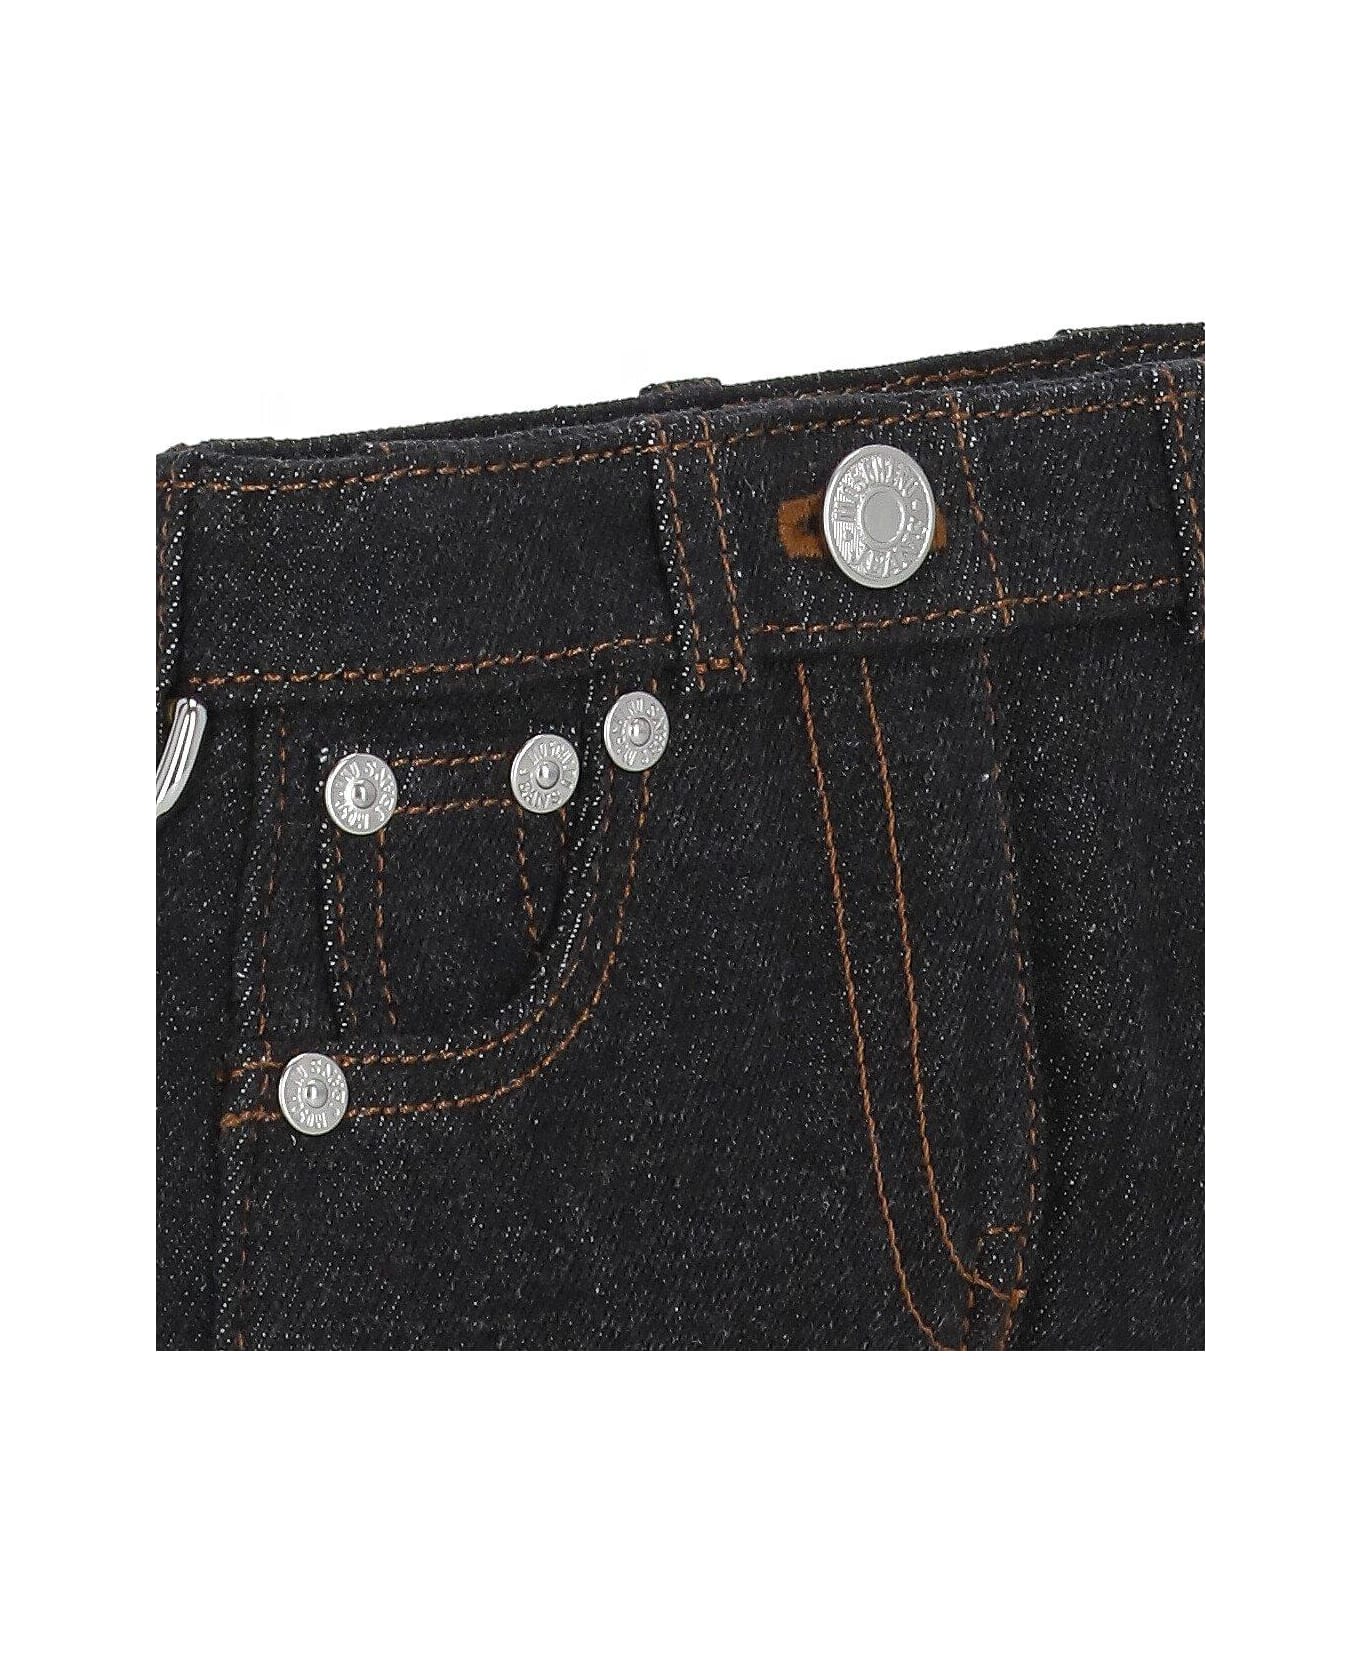 M05CH1N0 Jeans Jeans Denim Clutch Bag - BLACK トートバッグ